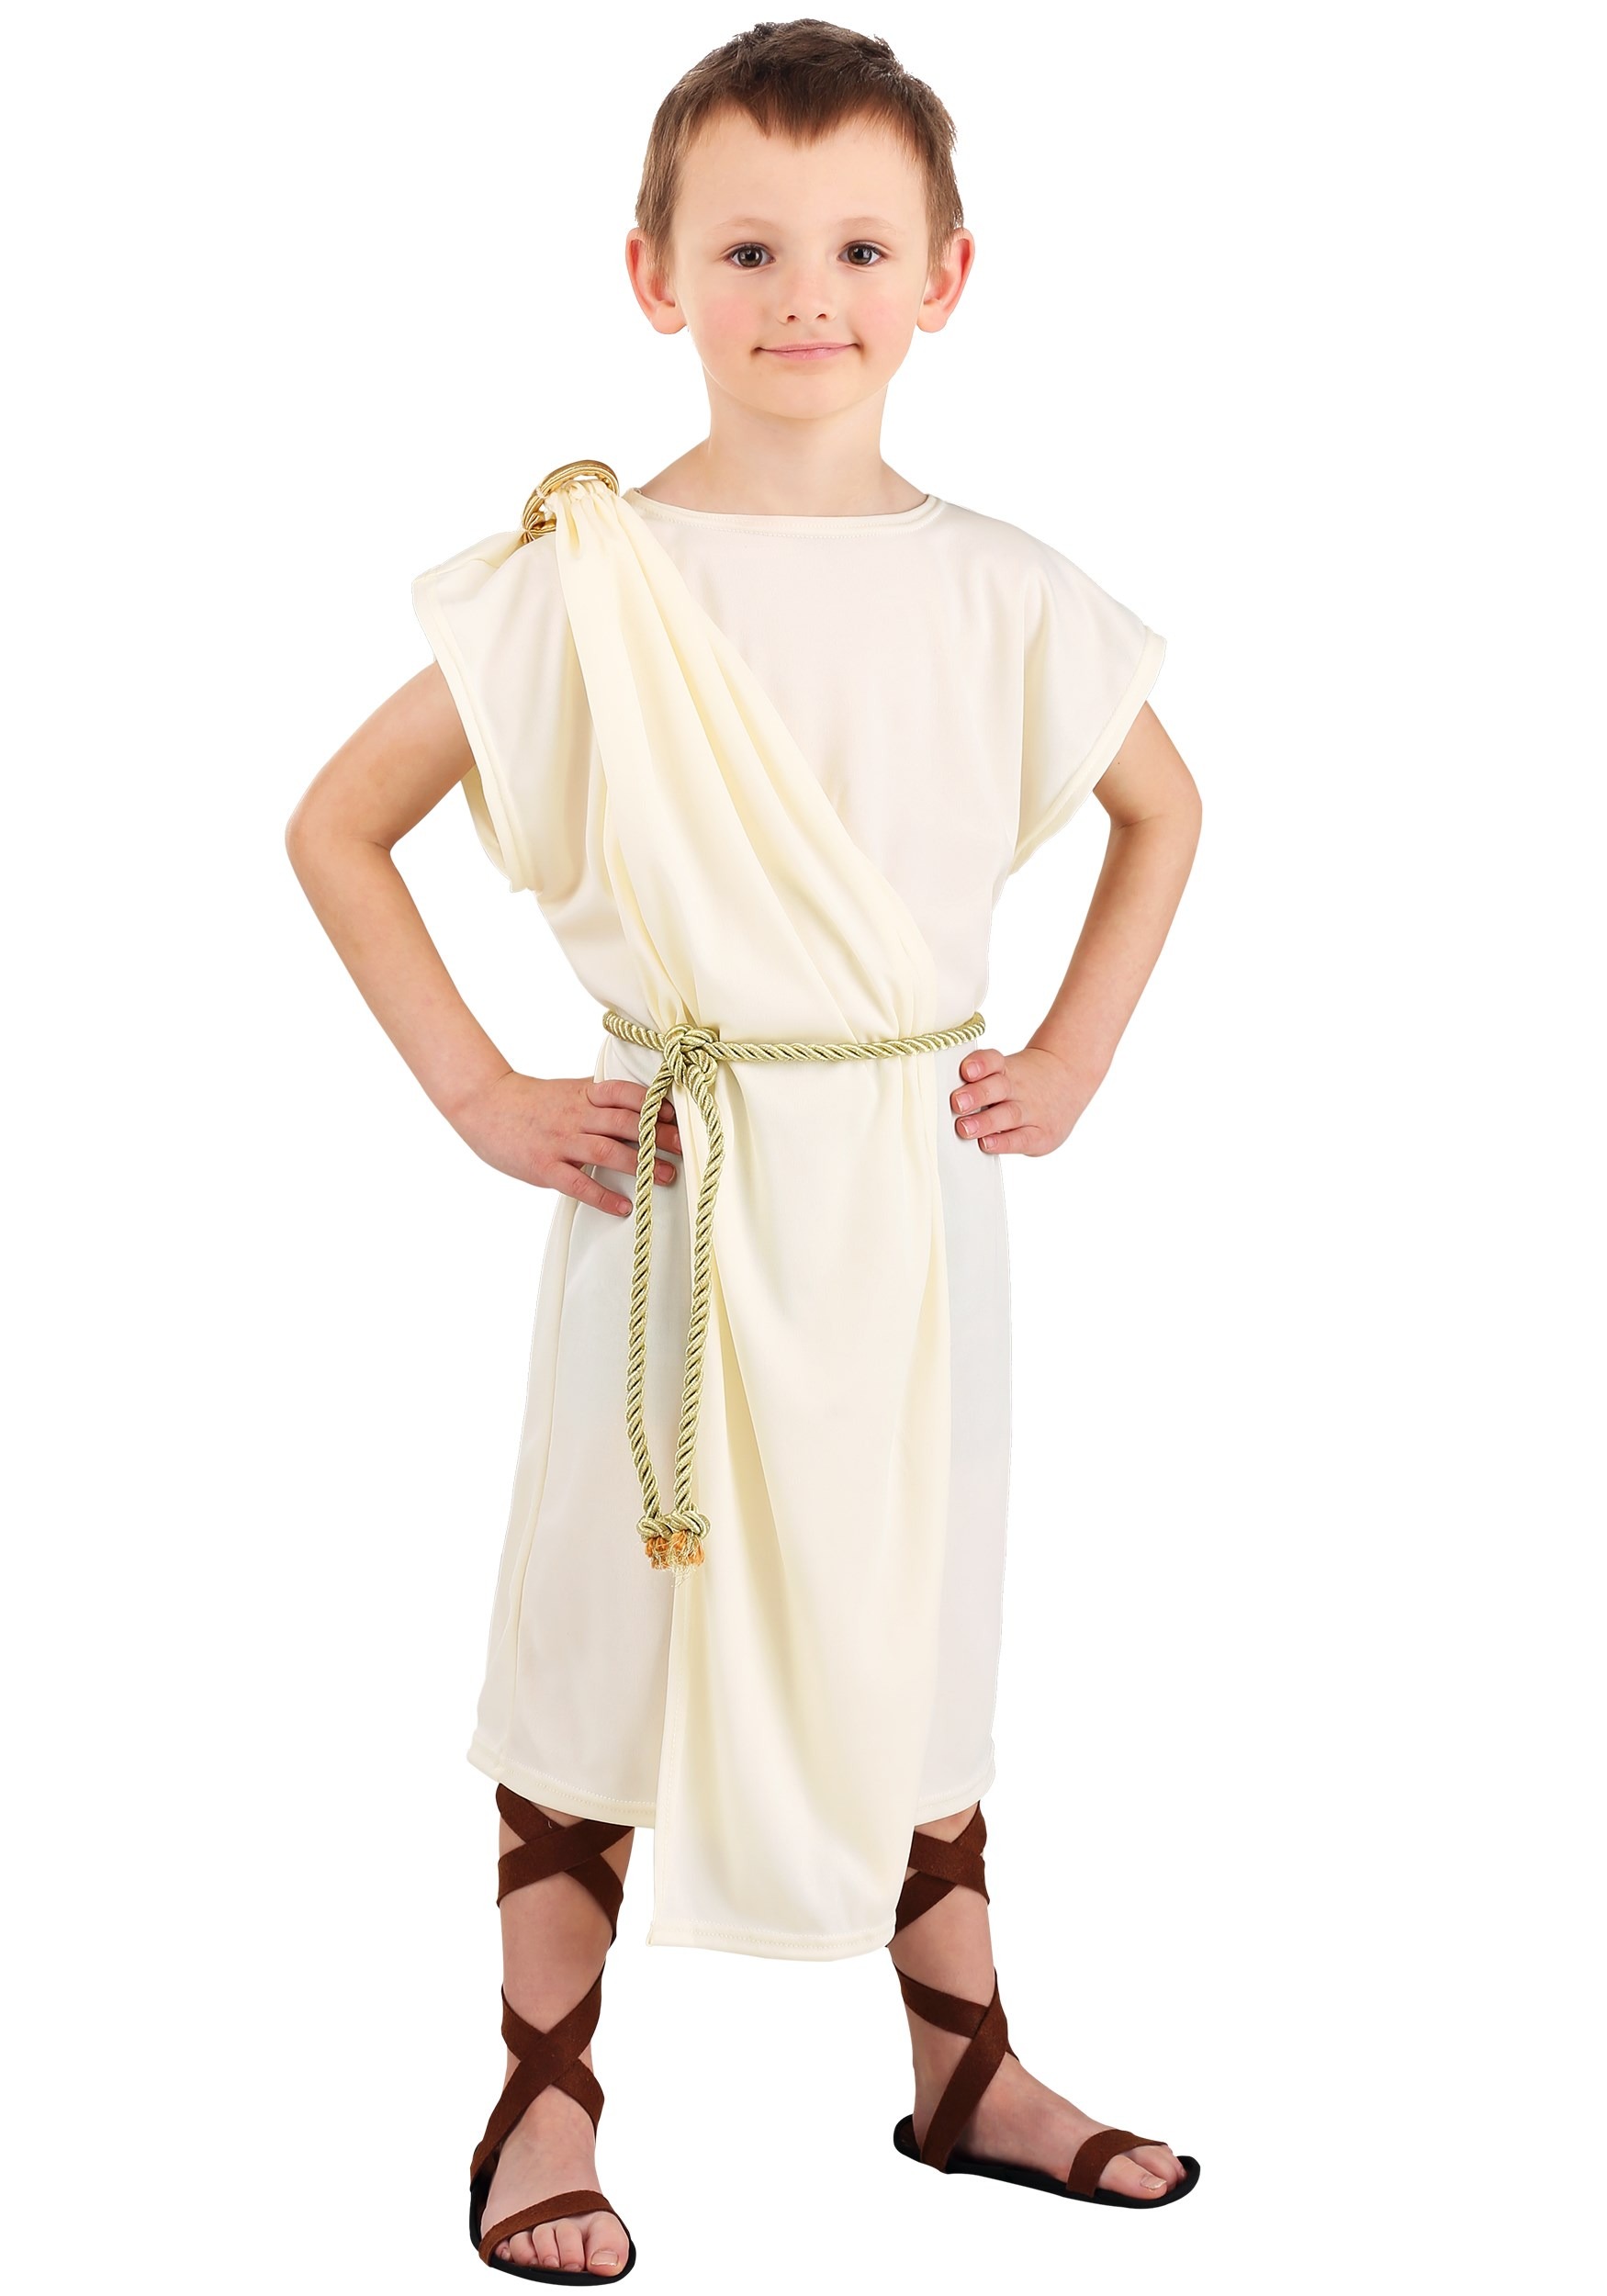 Toddler Roman Toga Costume